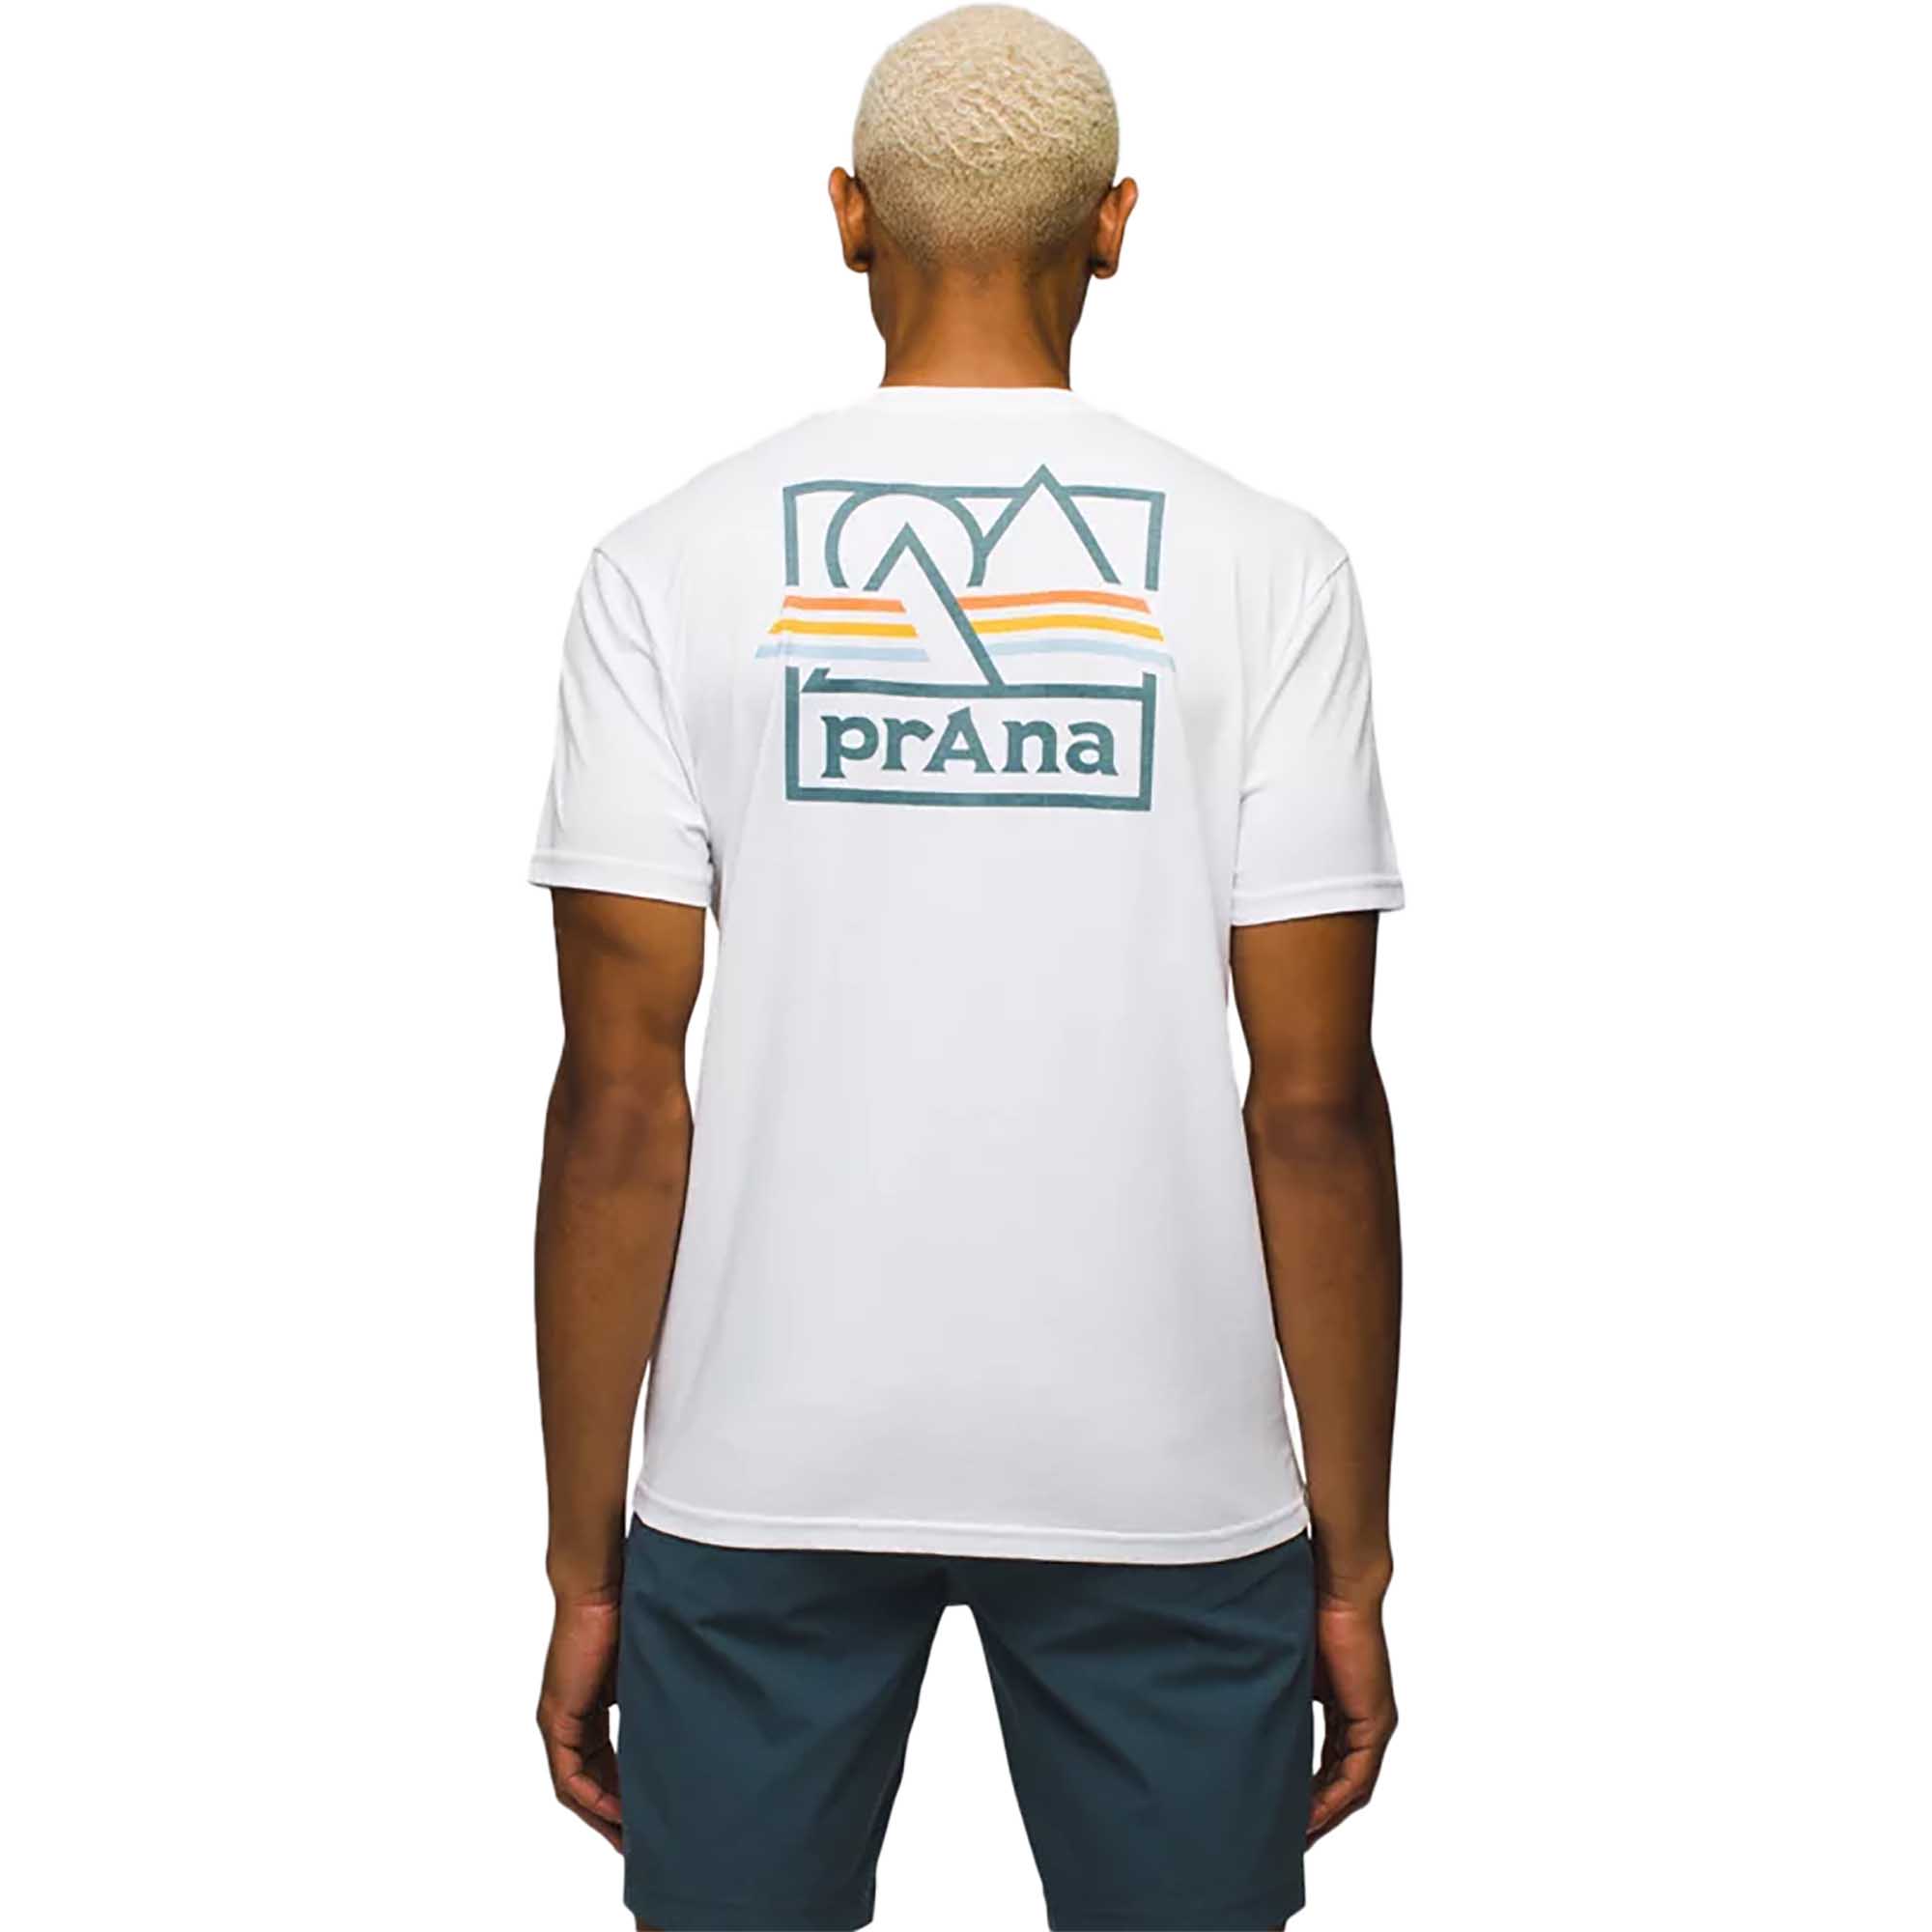 Prana Graphic Technical Short Sleeved Tee Shirt